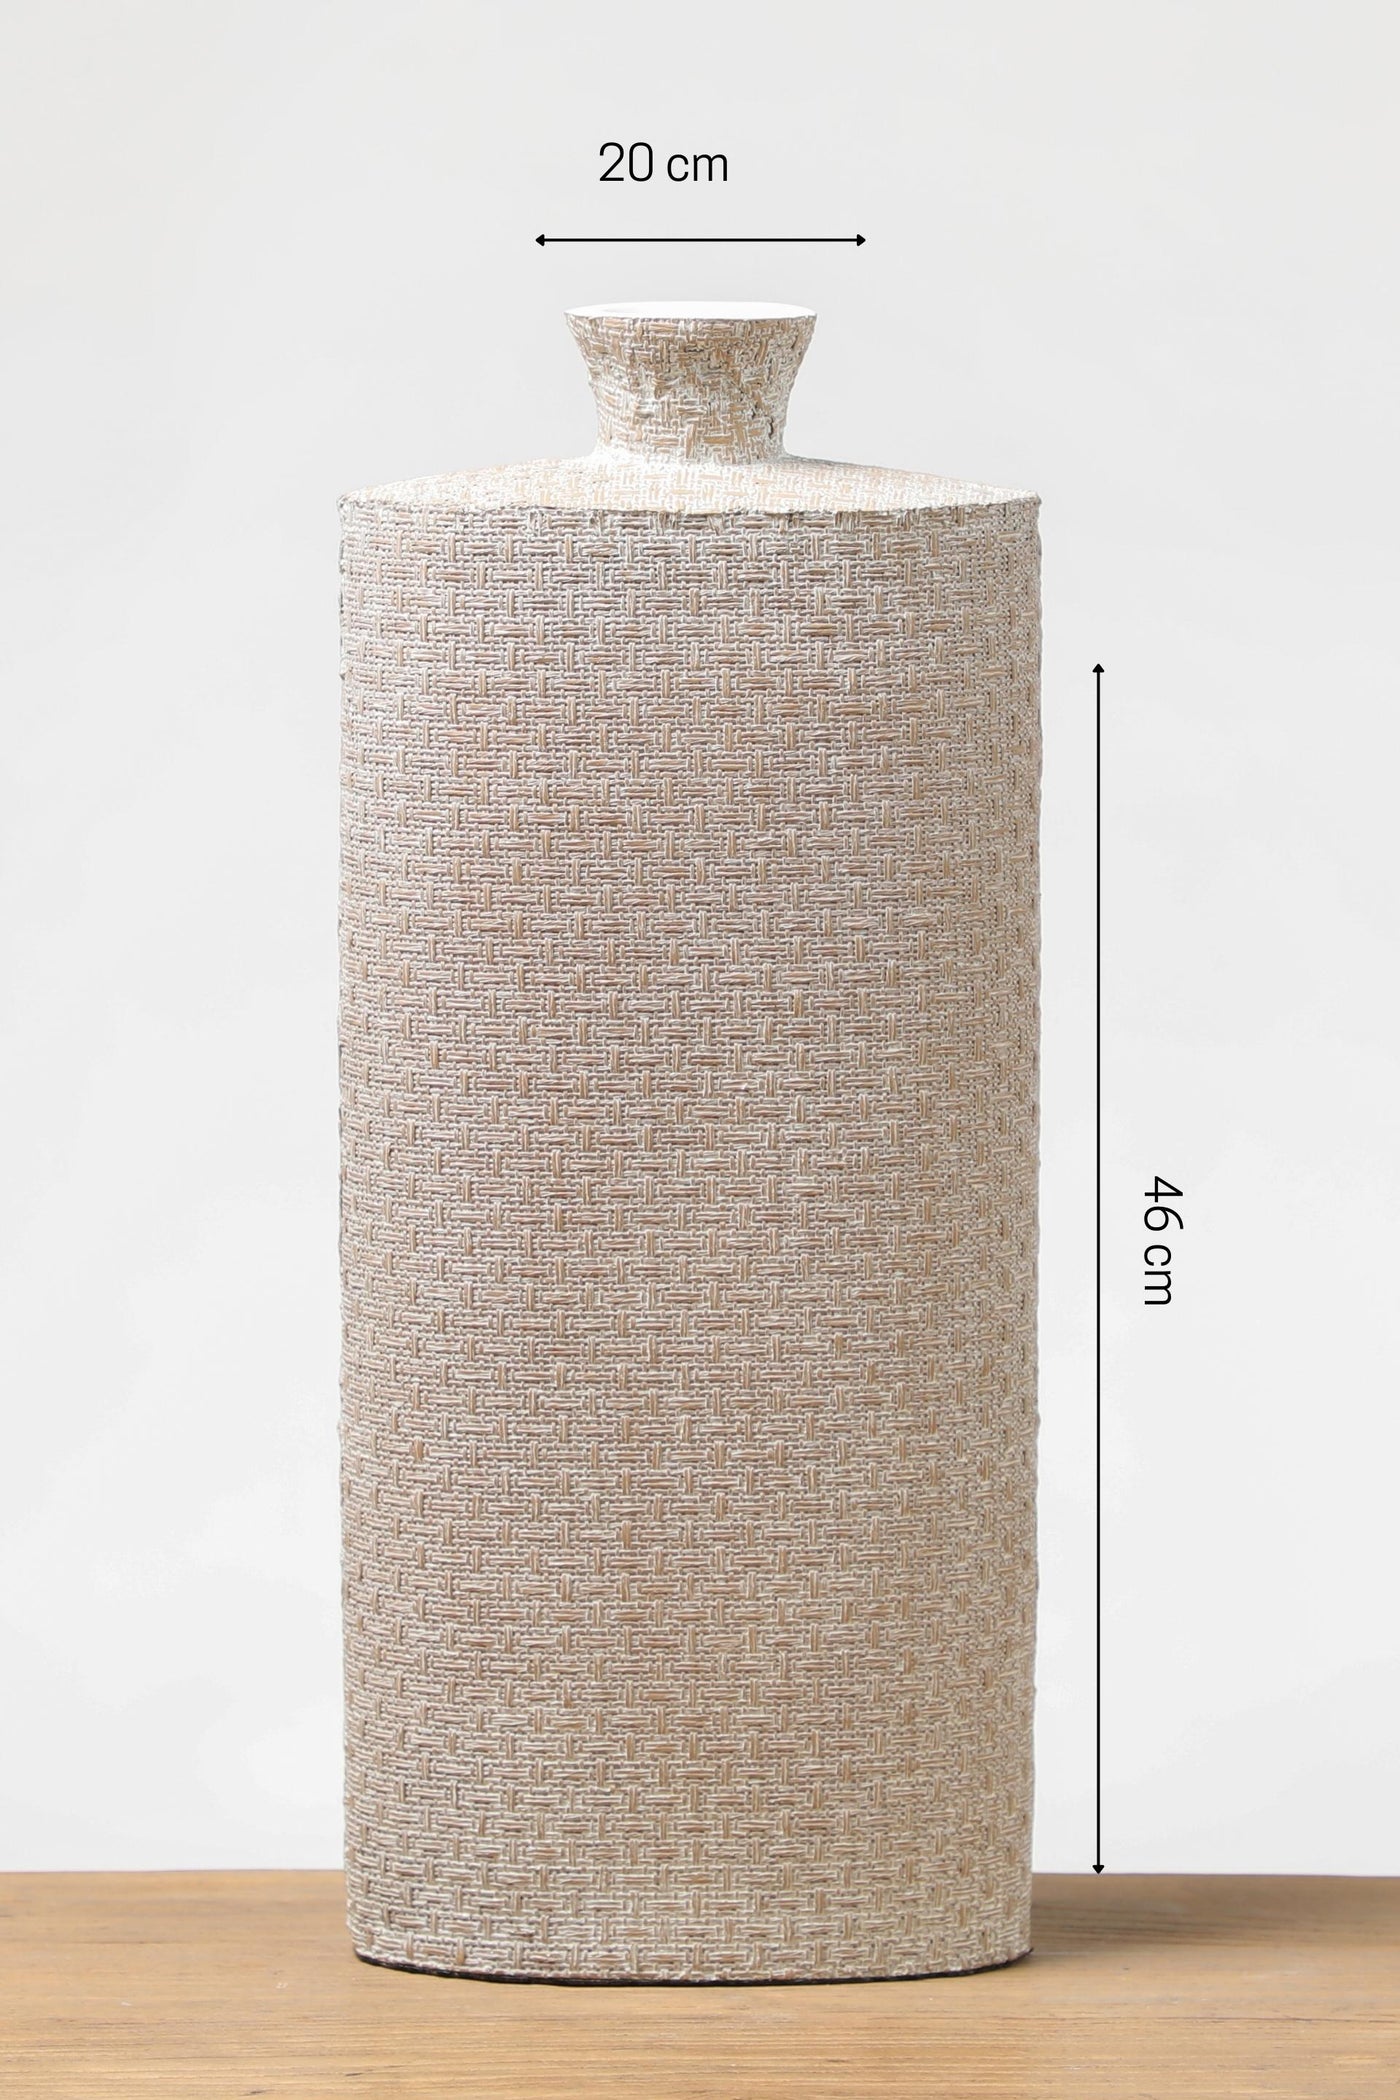 Cylinder shape resin flower vase for your home or office decor